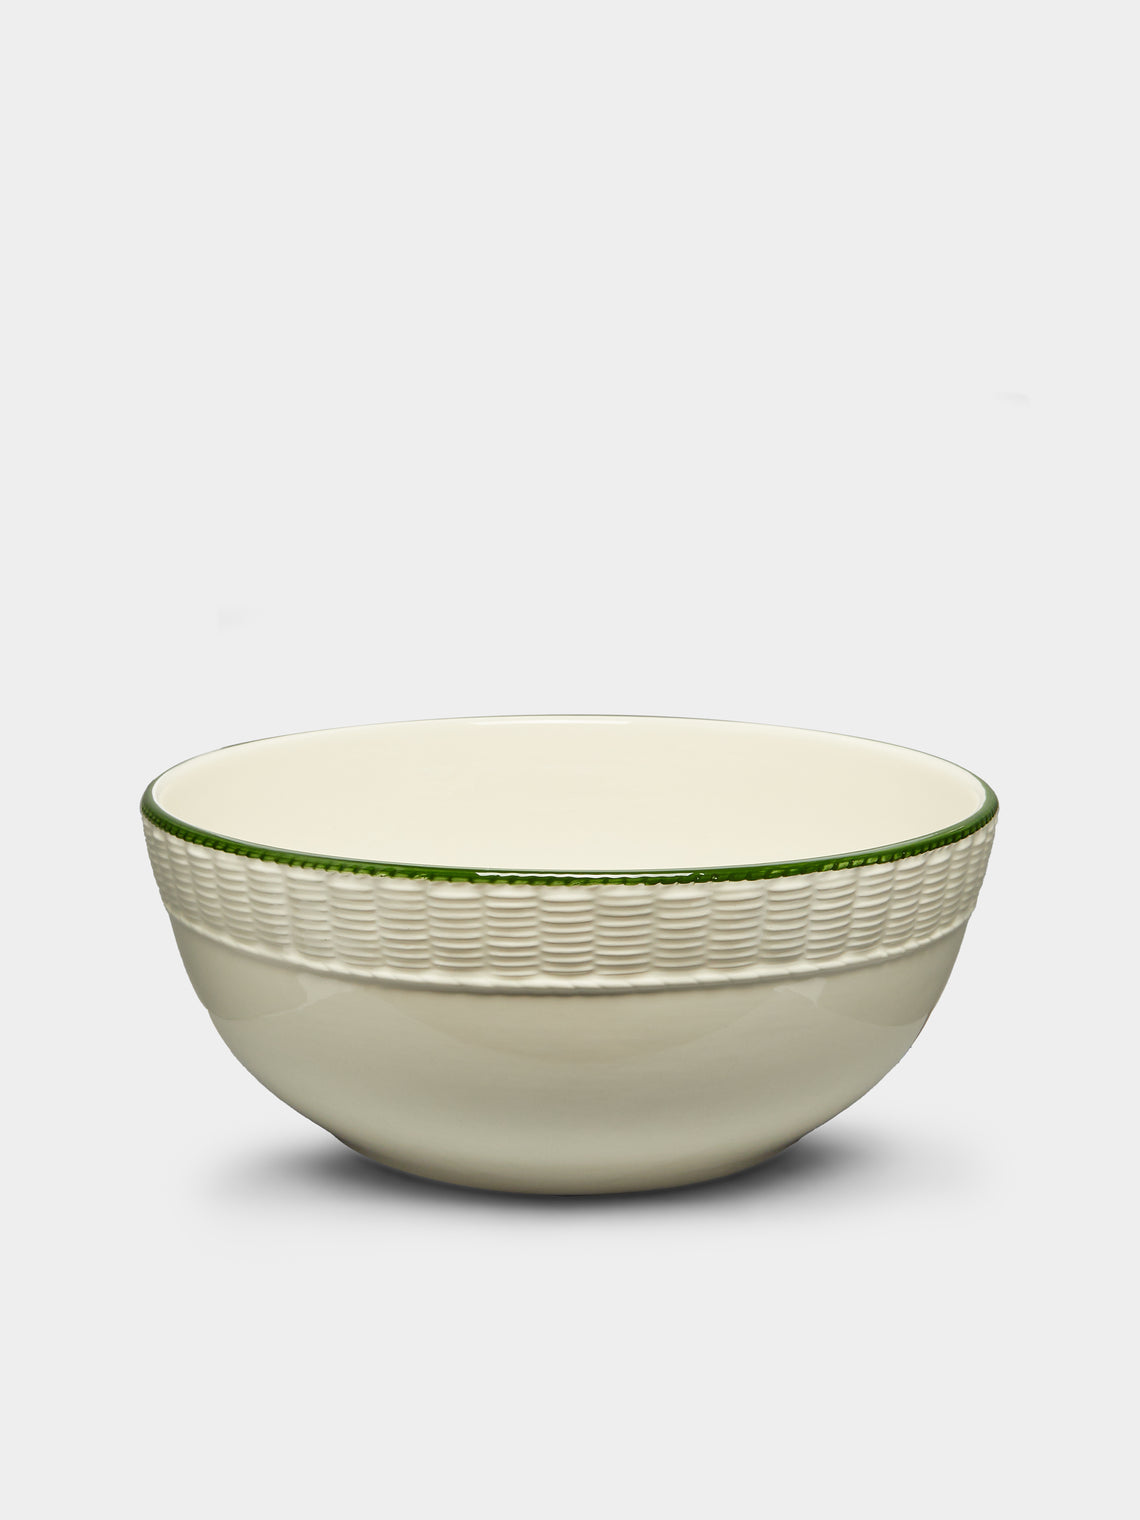 Este Ceramiche - Wicker Hand-Painted Ceramic Large Salad Bowl -  - ABASK - 